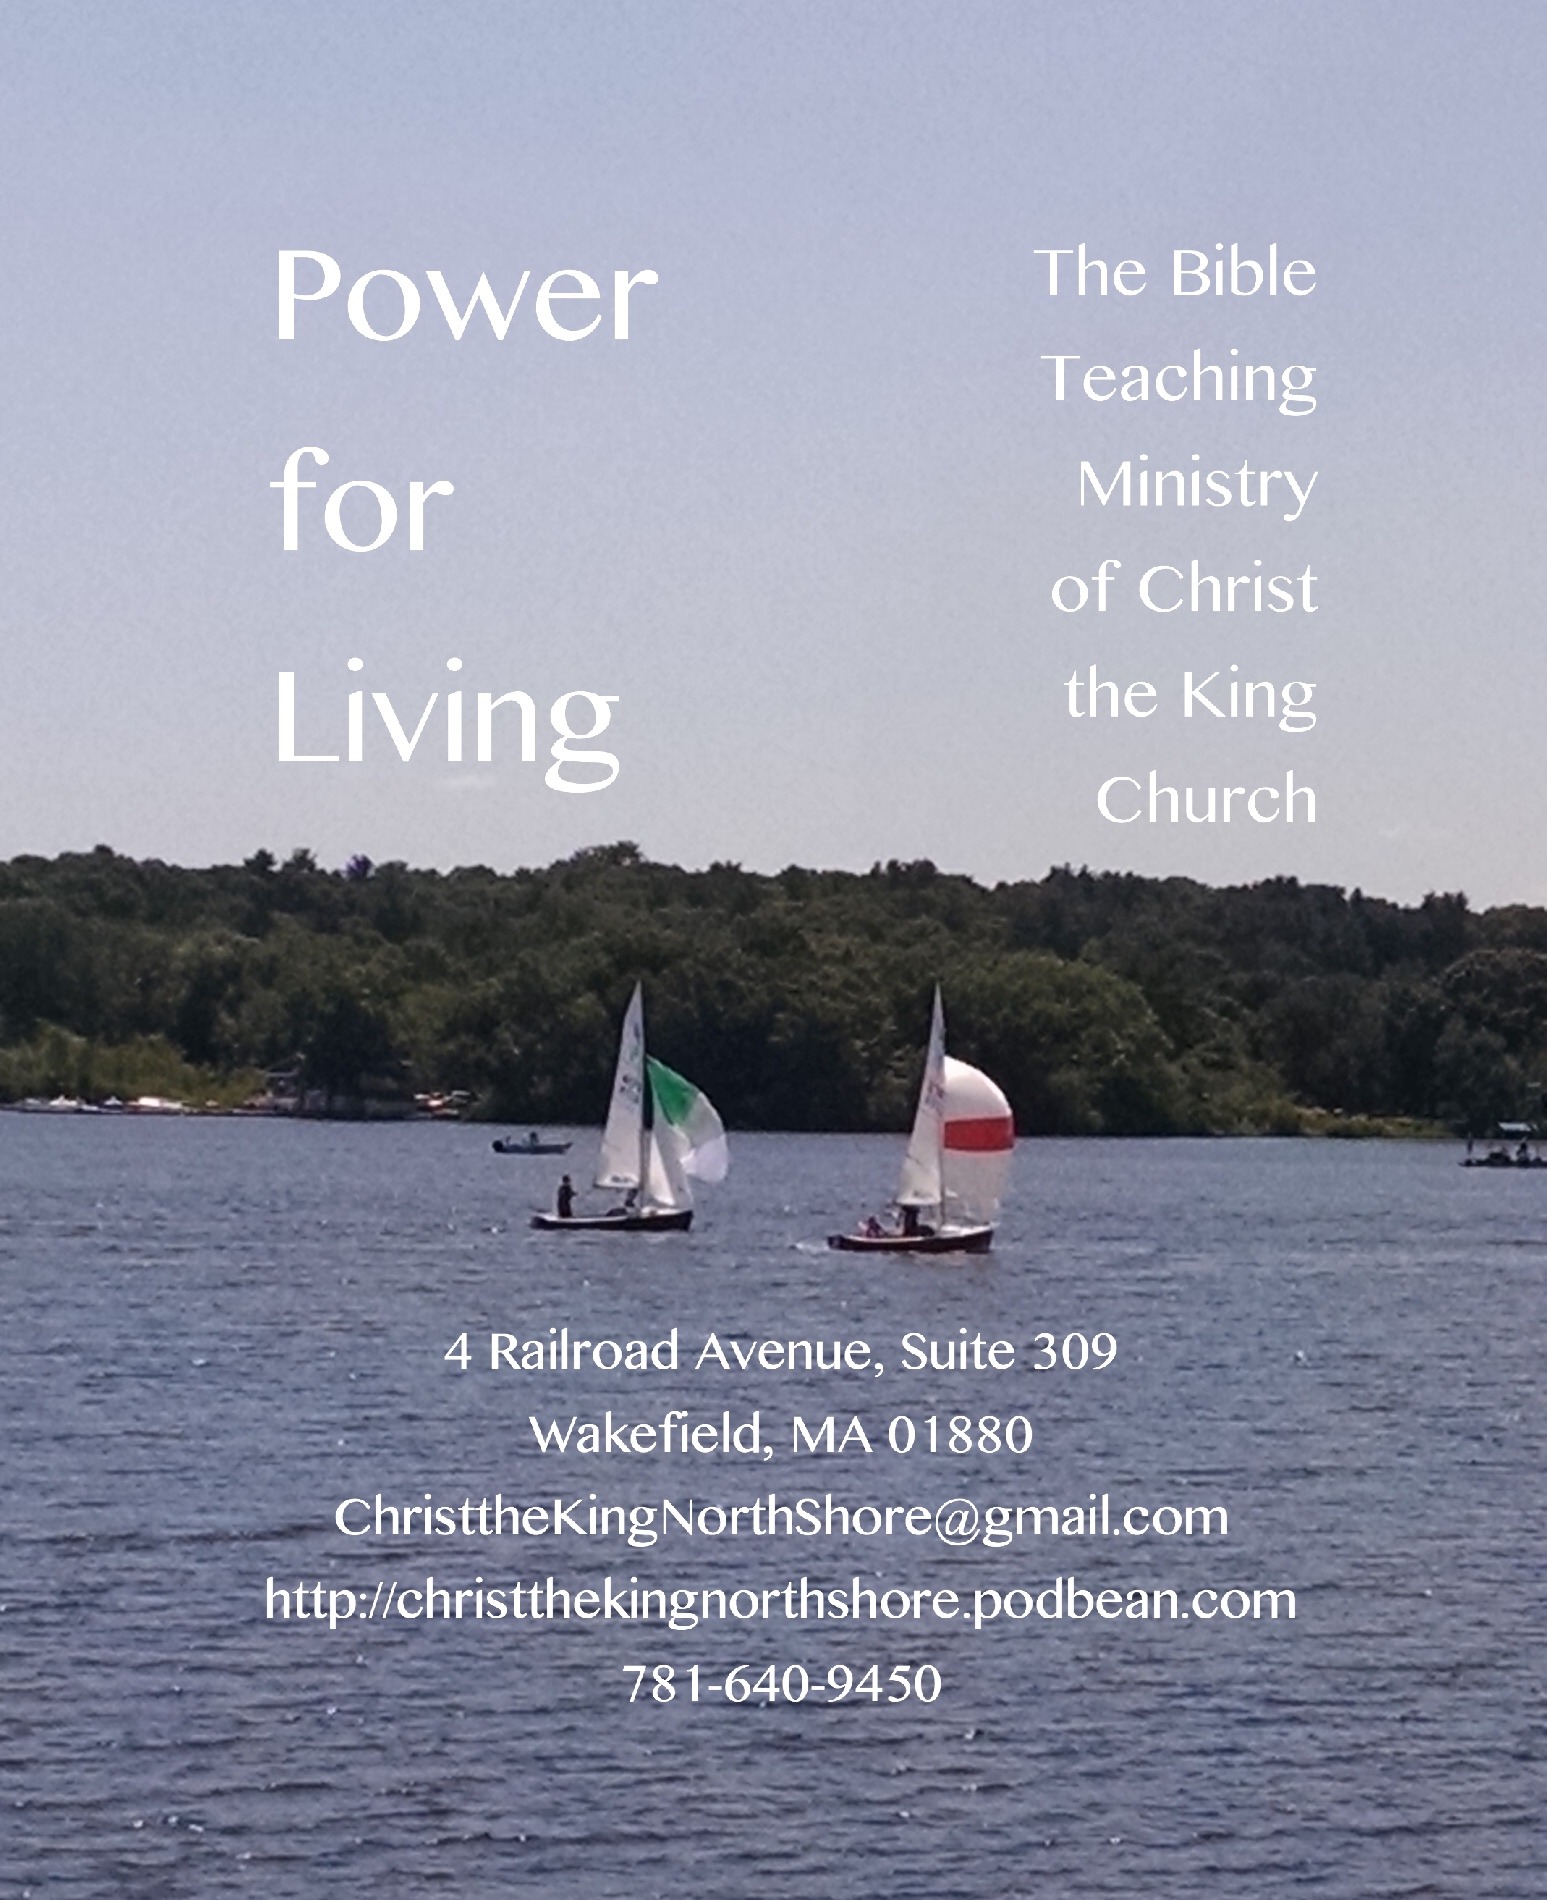 Power for Living, Episode 151227, Walking Like Simeon